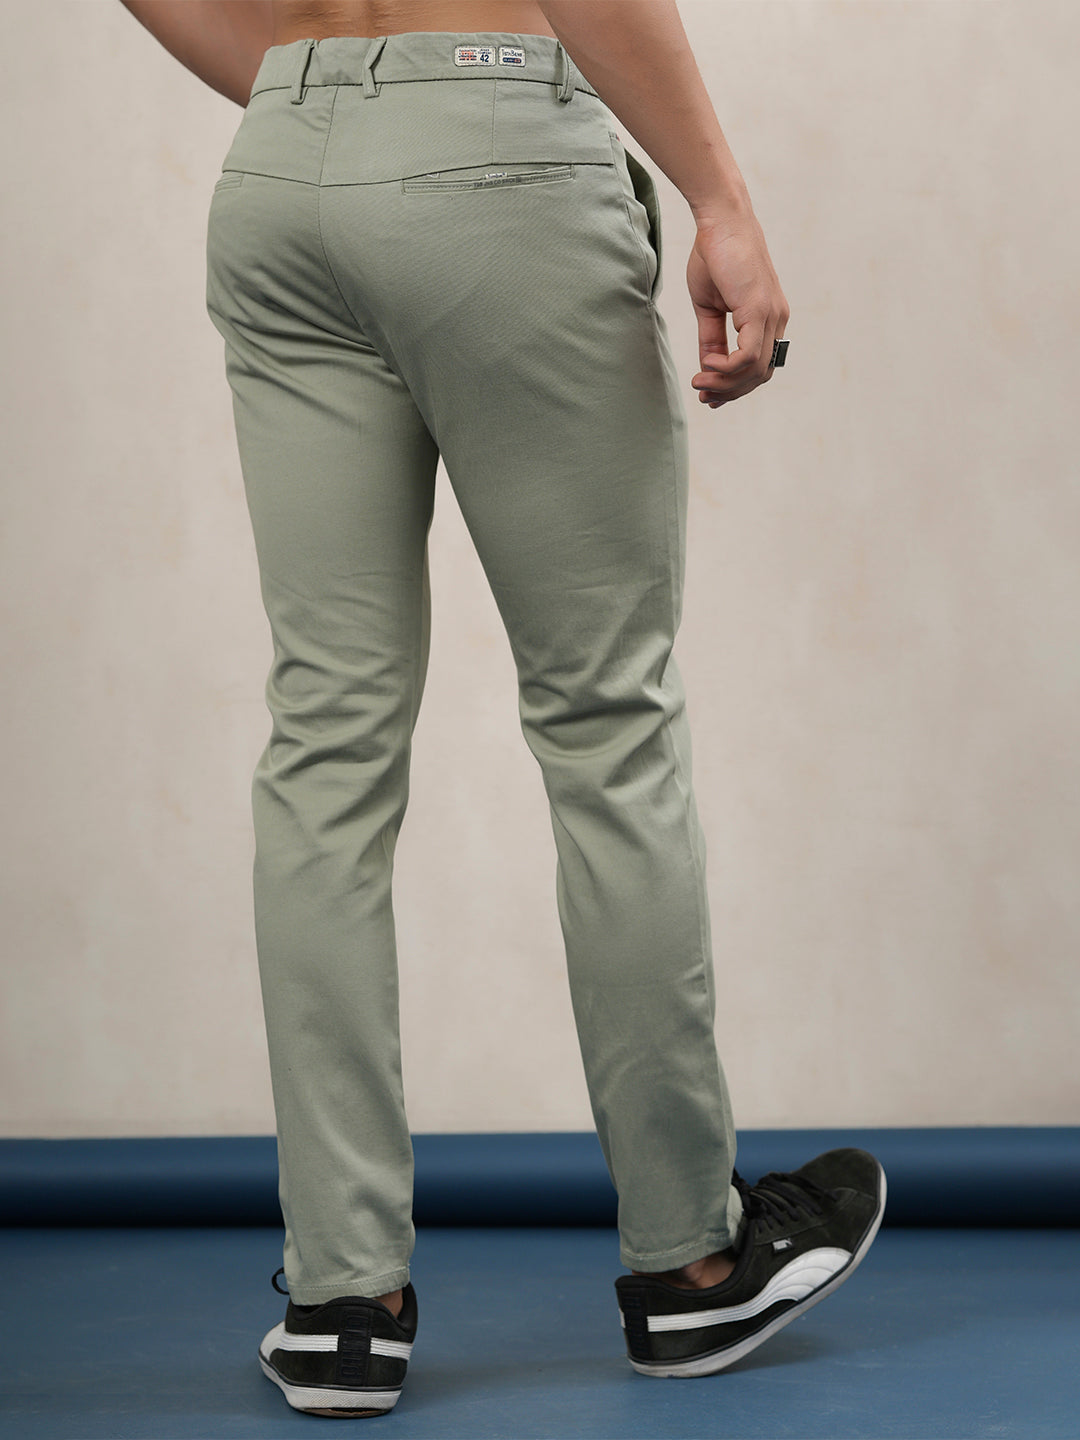 Pista Color Formal Trouser Pants for Men